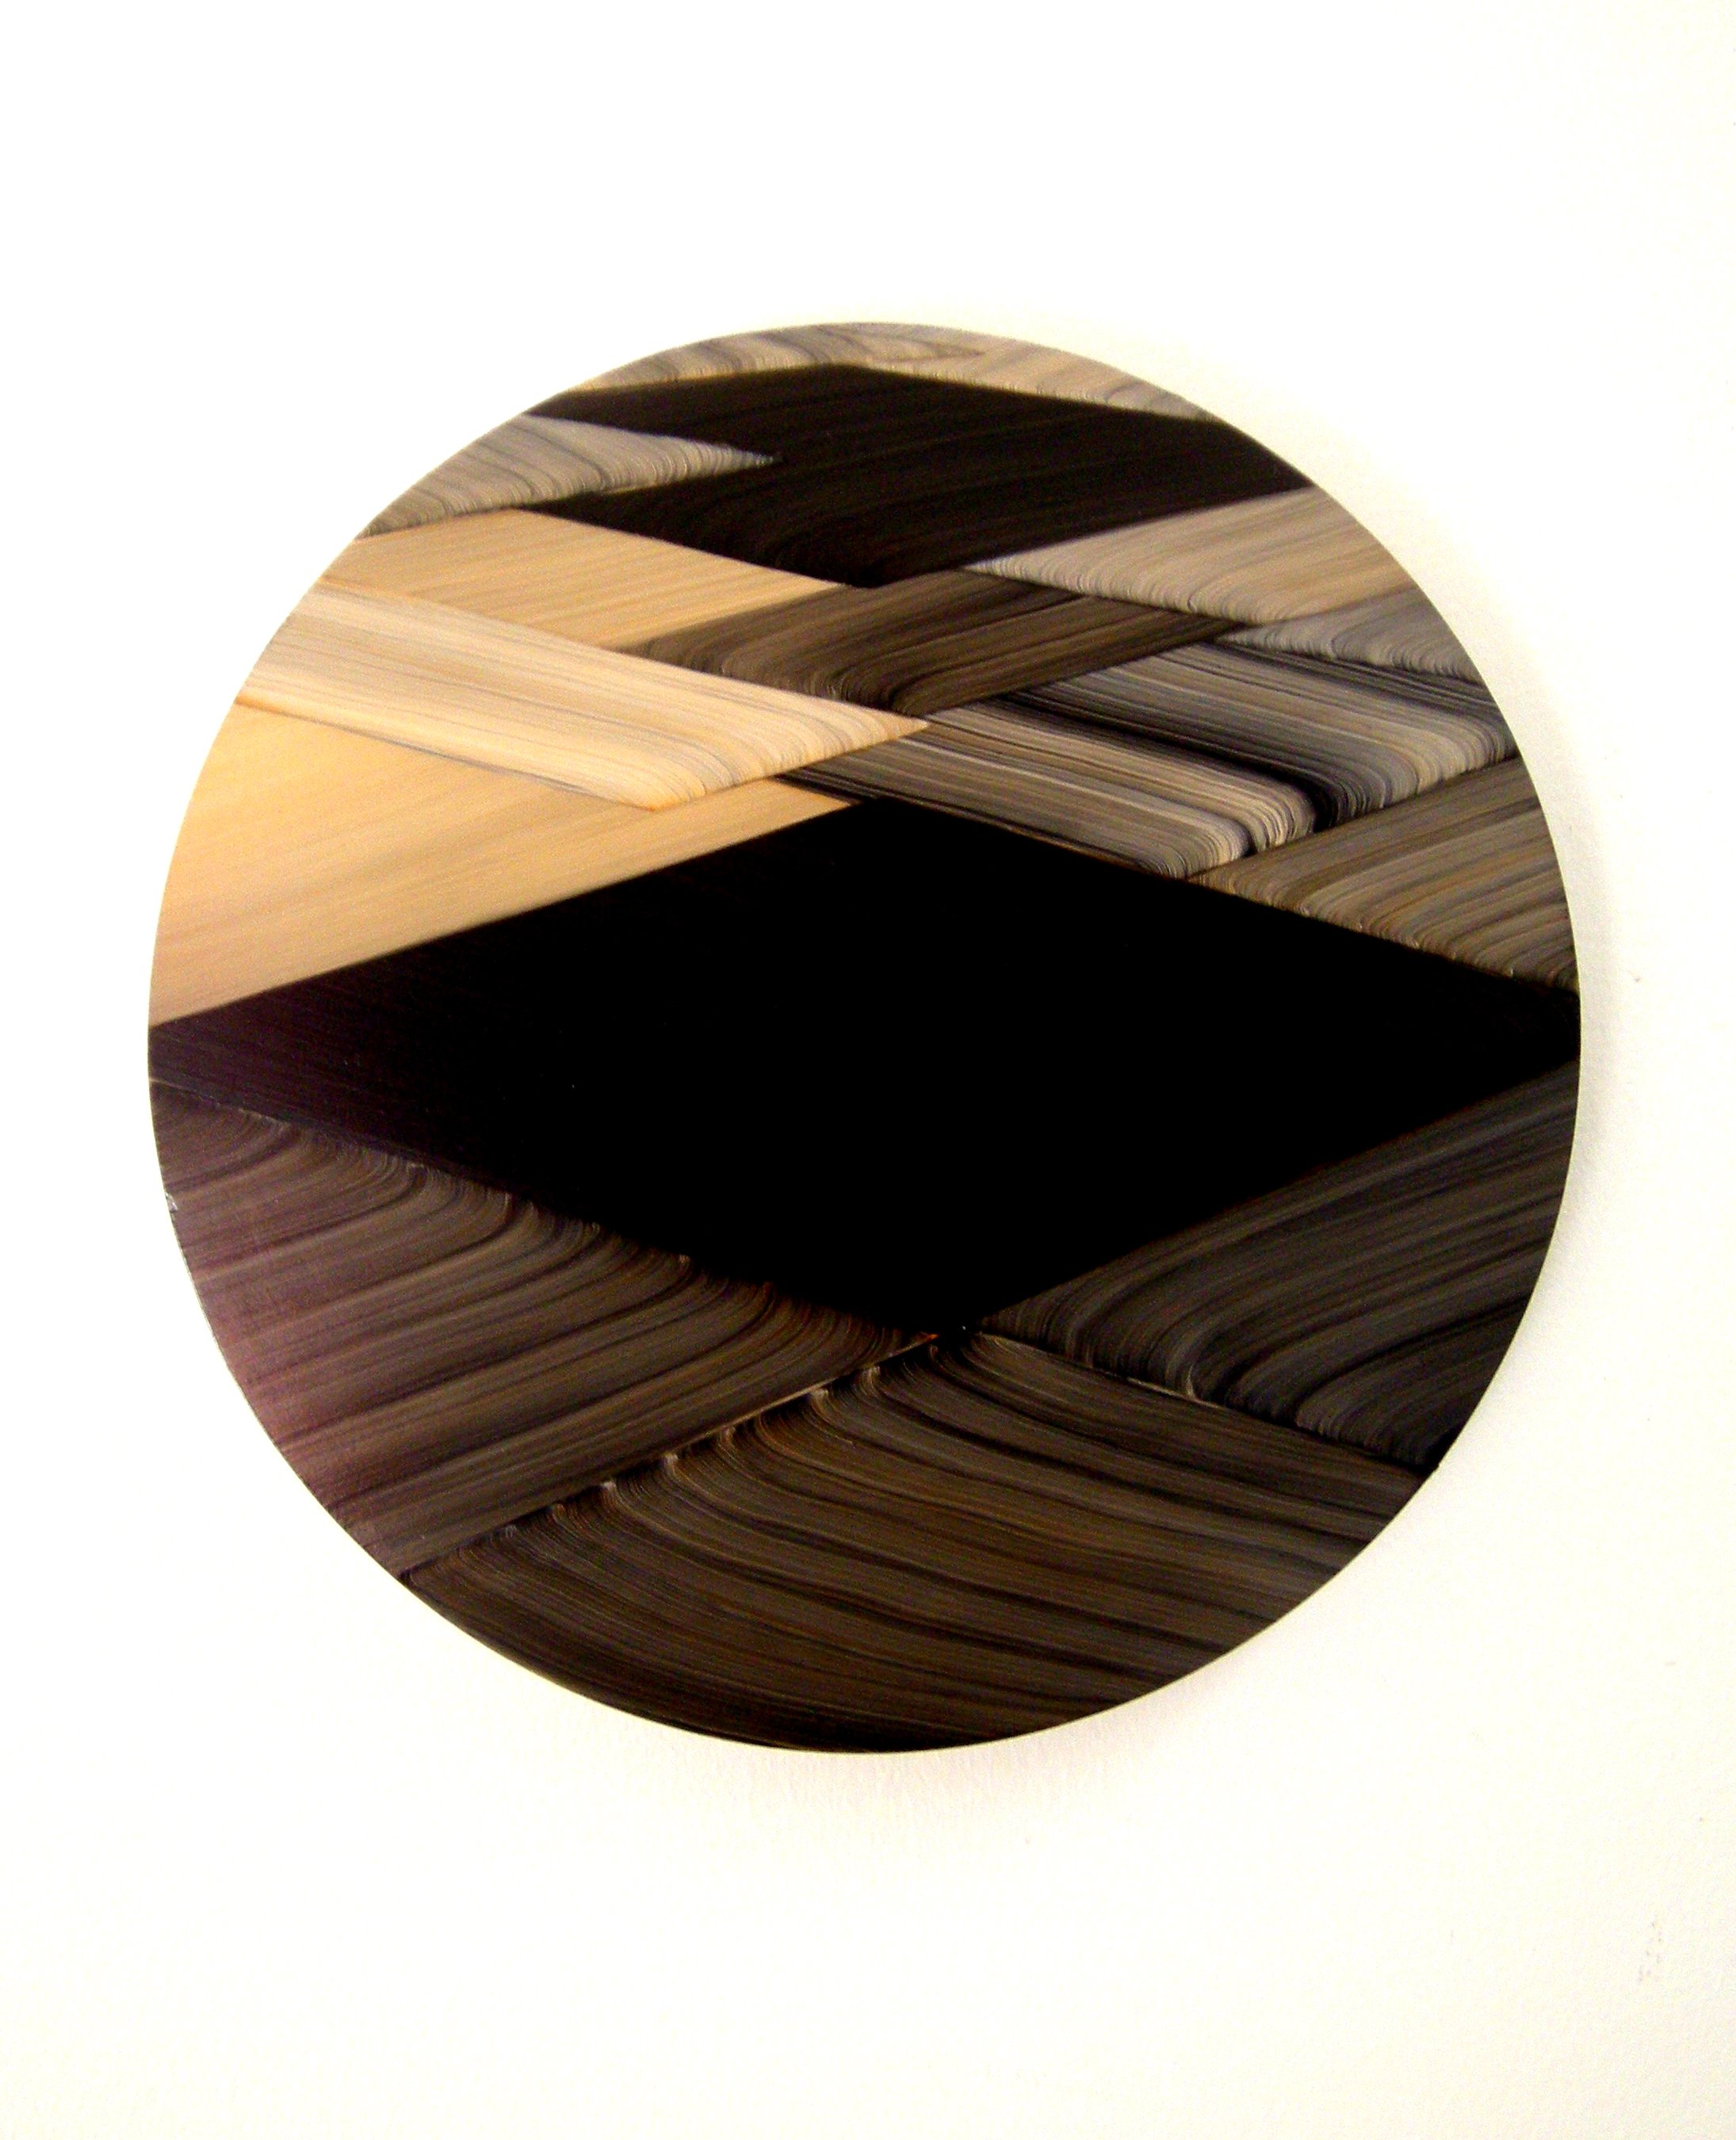 M. B. O'Toole, Untitled 3, oil on board, 30cm diameter, 2011.